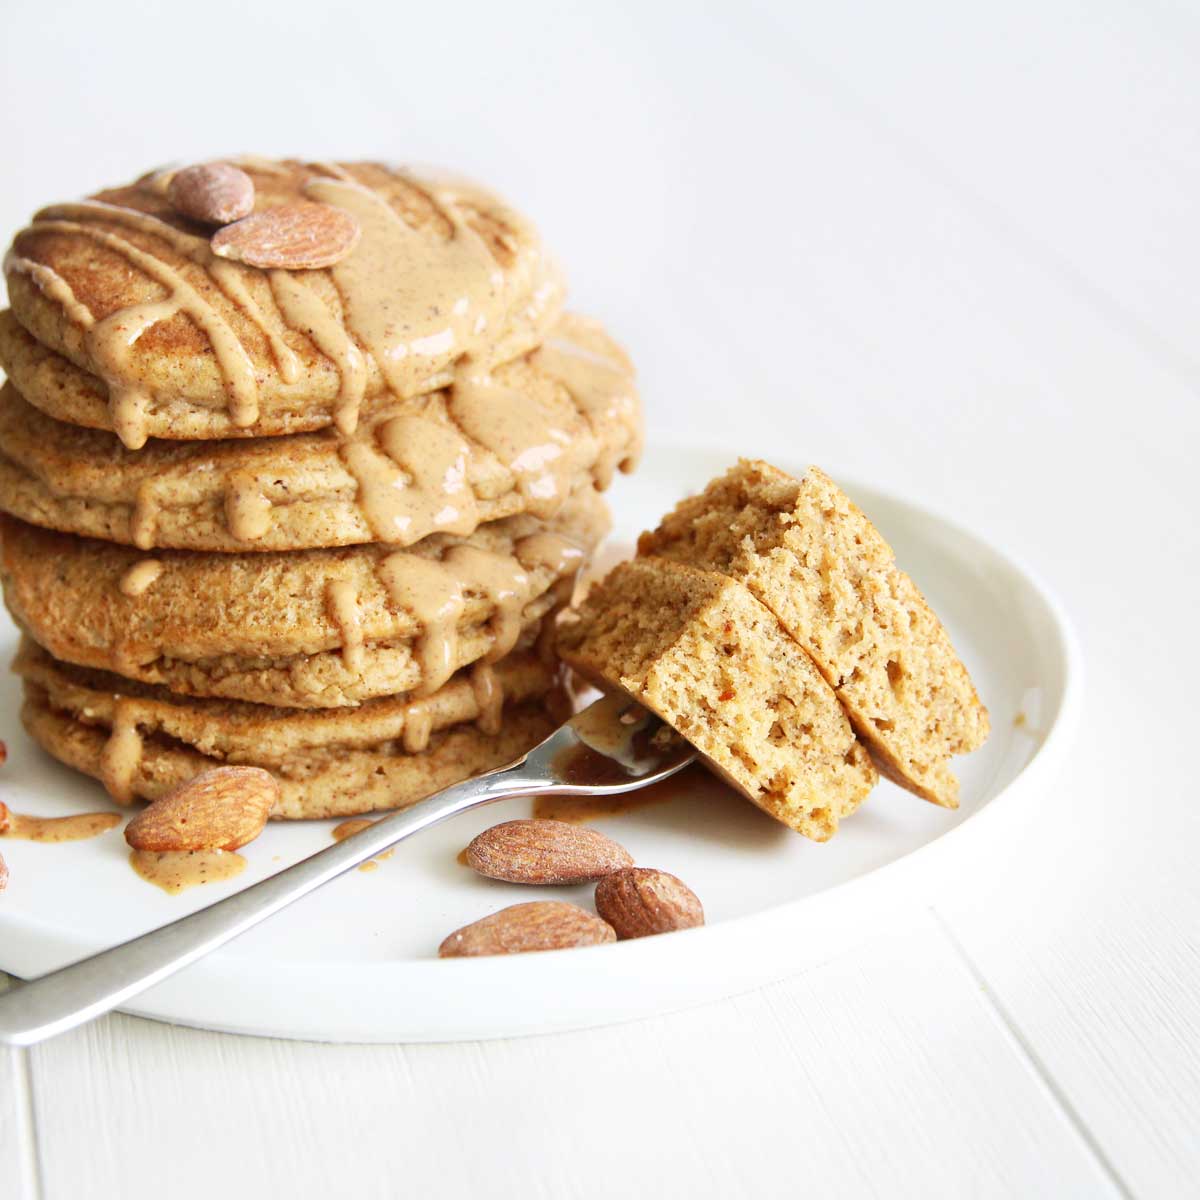 Fluffy Almond Butter Pancakes (Healthy, Gluten-Free Recipe) - Pecan Pie Bars